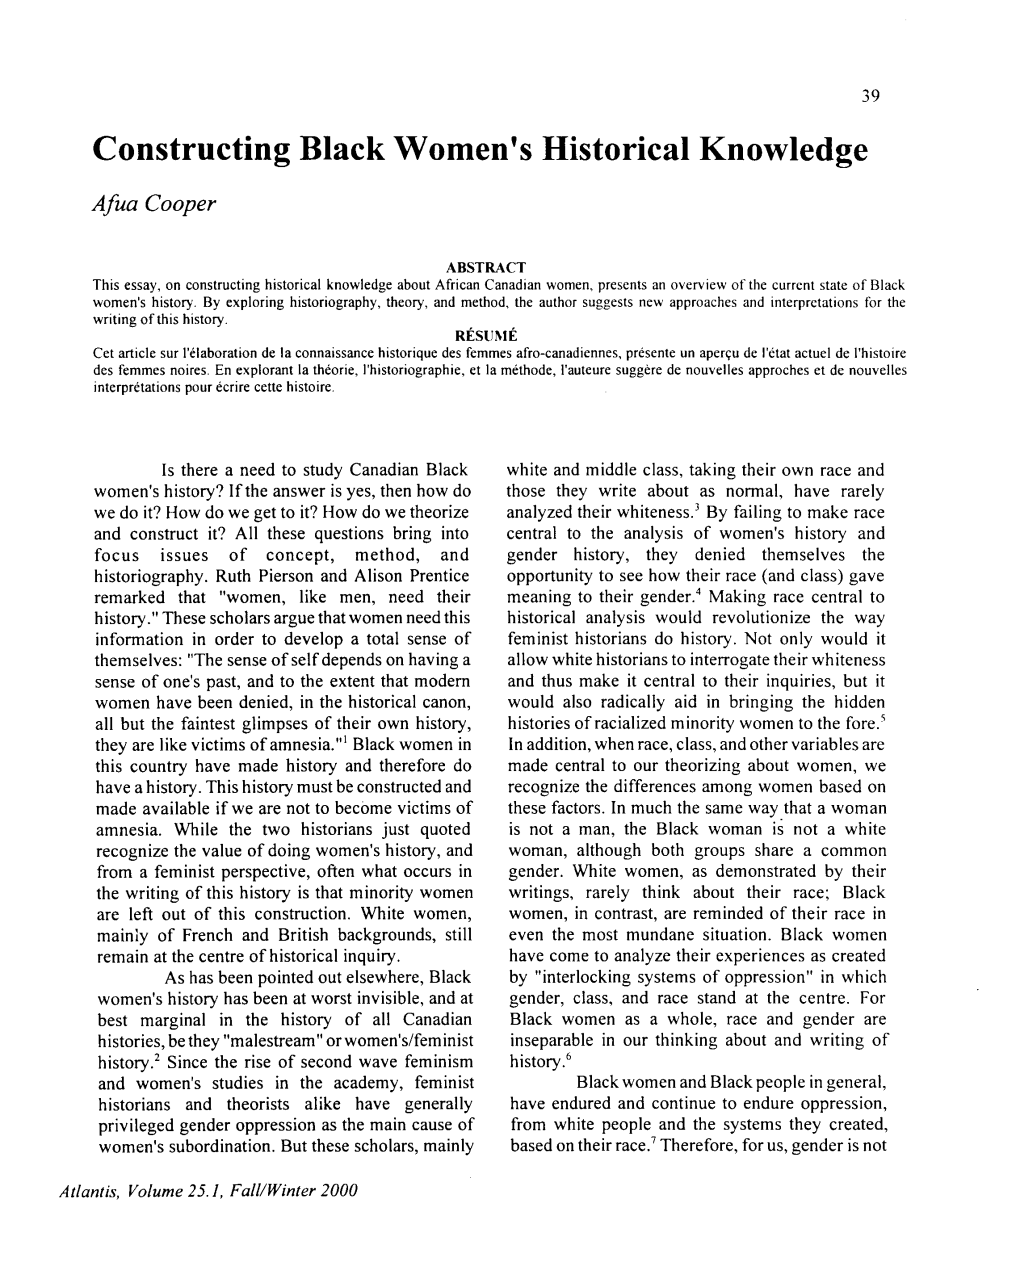 Constructing Black Women's Historical Knowledge